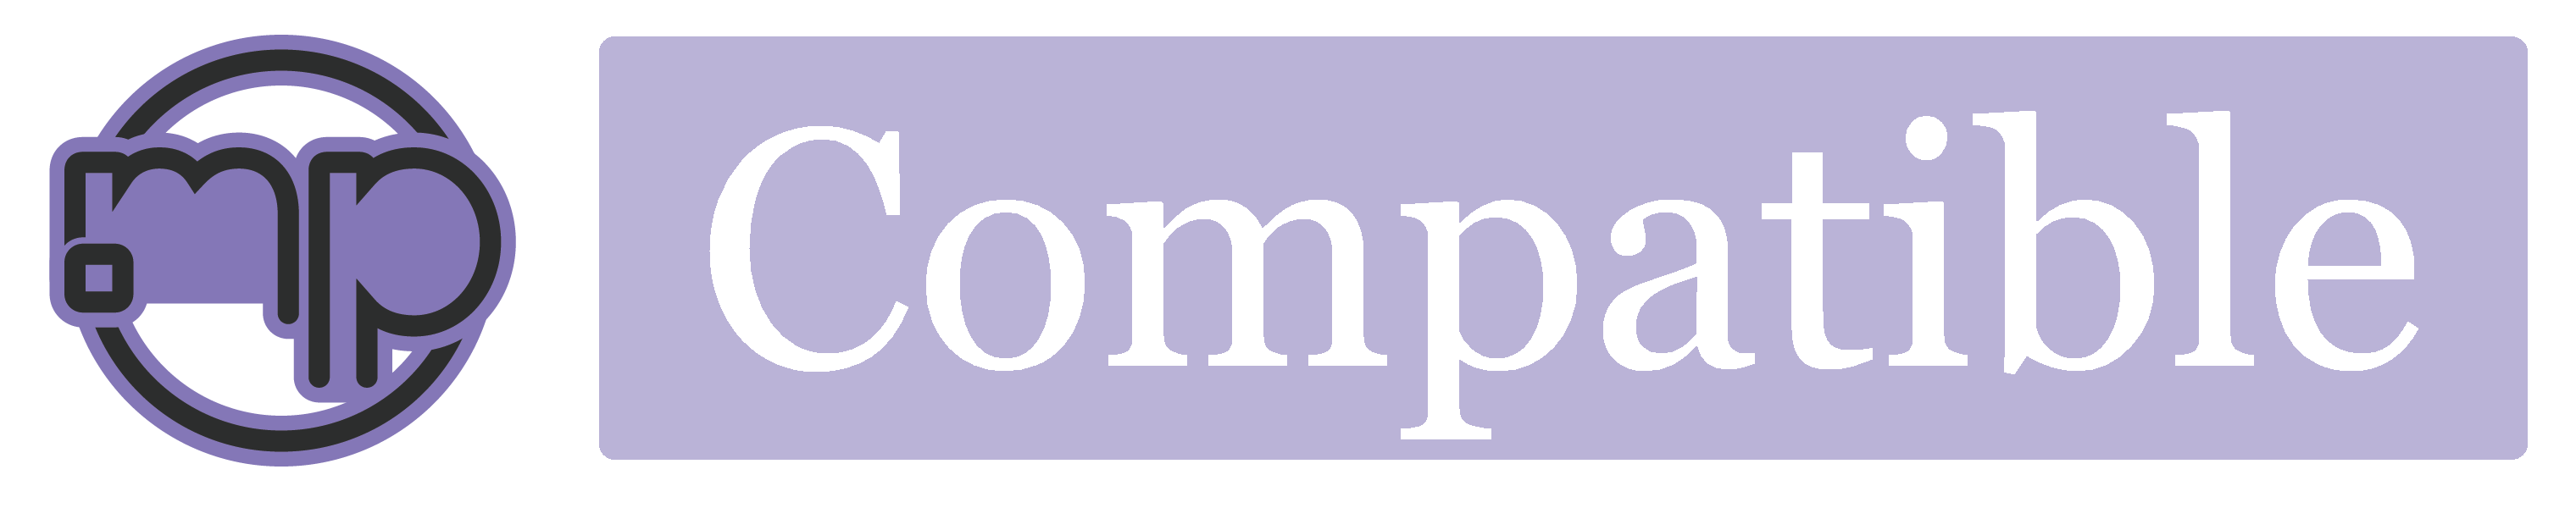 omp_compatible.png